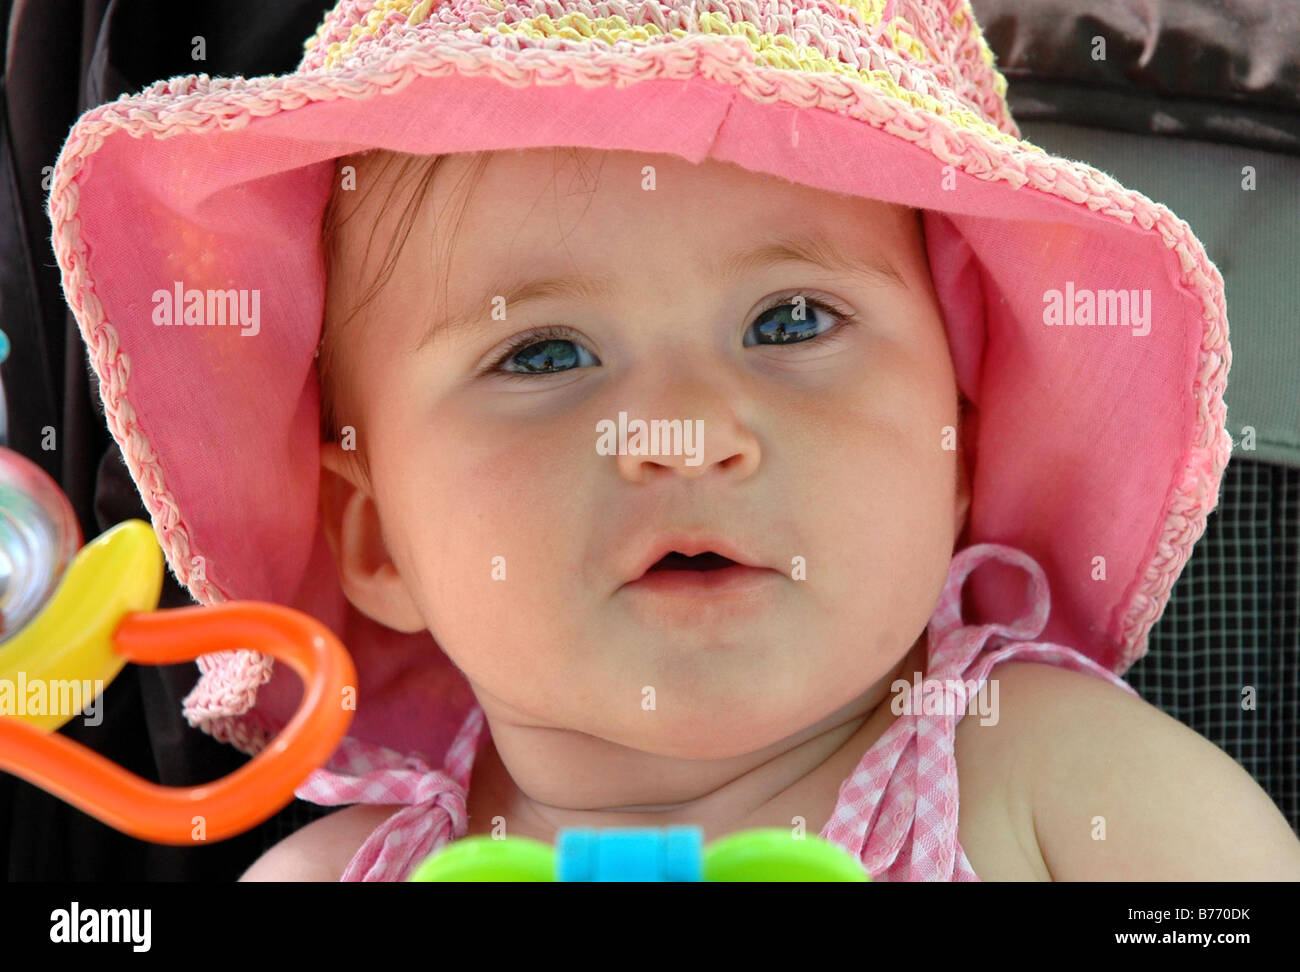 baby girl child happy hat joyful smile look Stock Photo